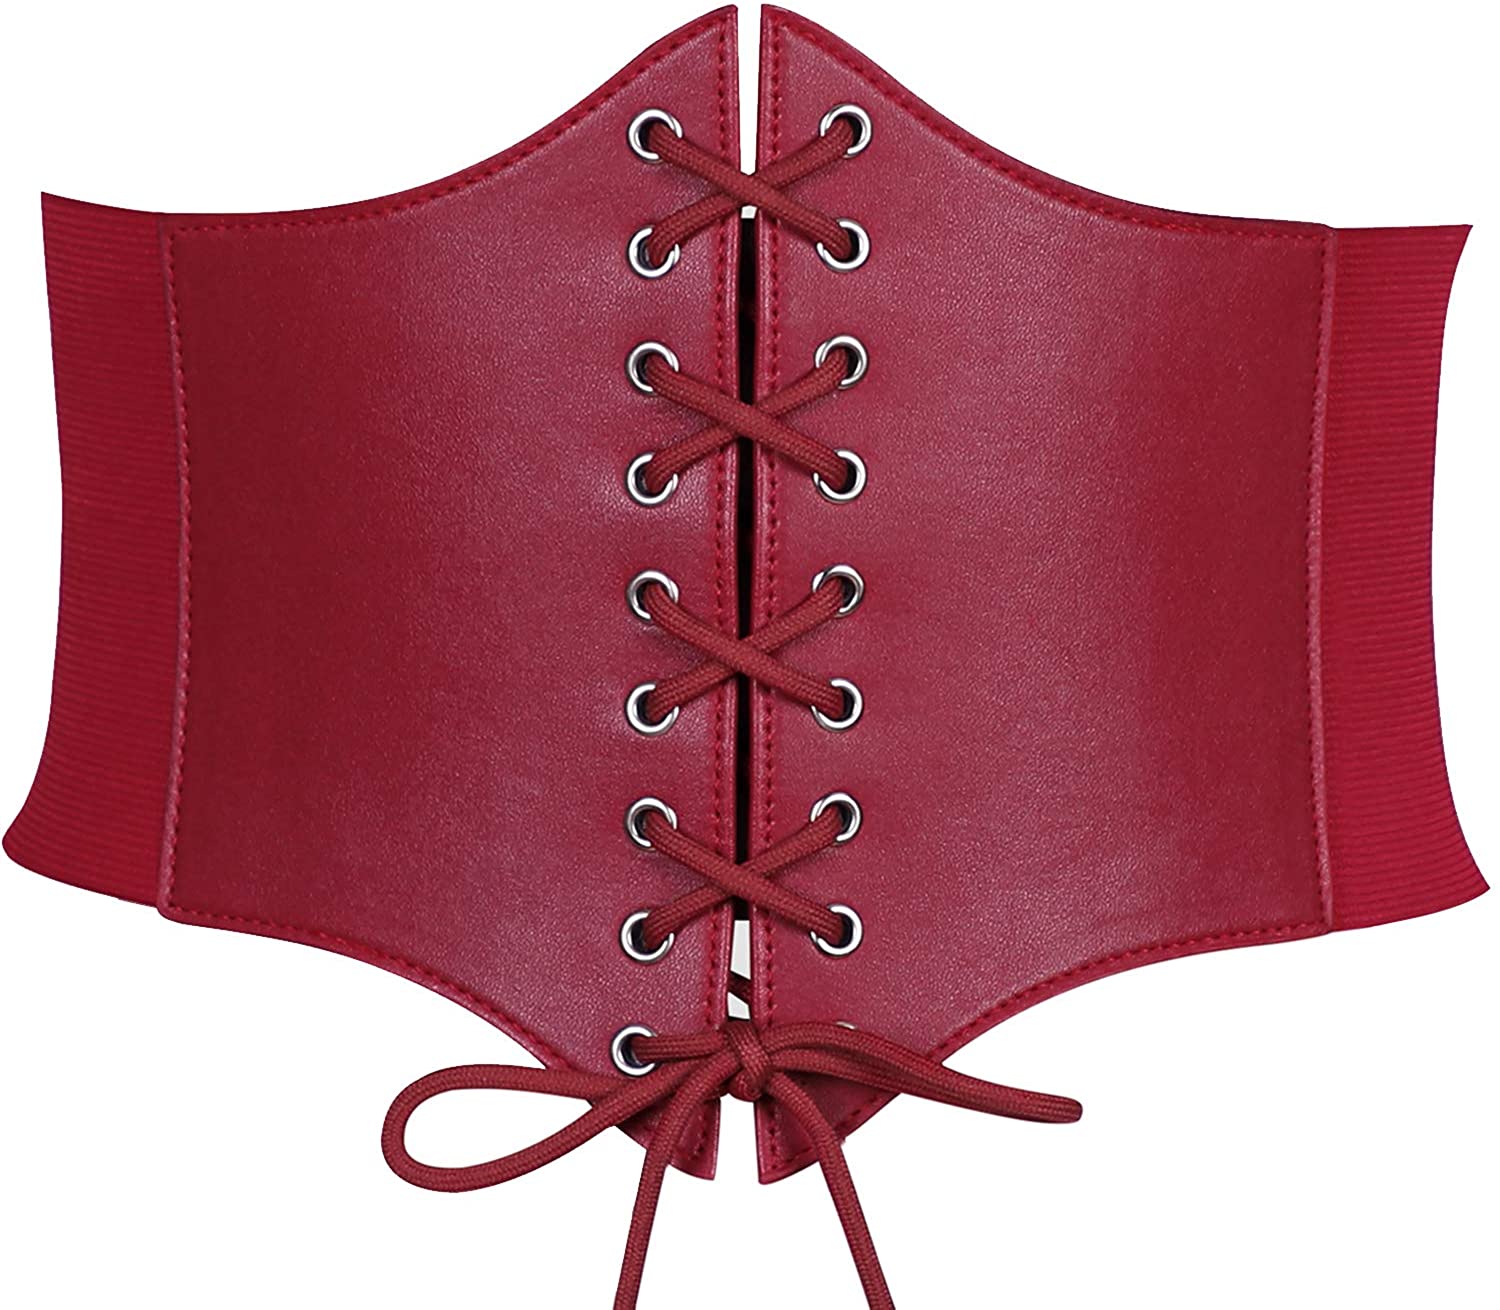 HOEREV Women Girls Elastic Wide Band Elastic Tied Waspie Corset Waist Belt Bustiers Corsets Size XS-XXXL 